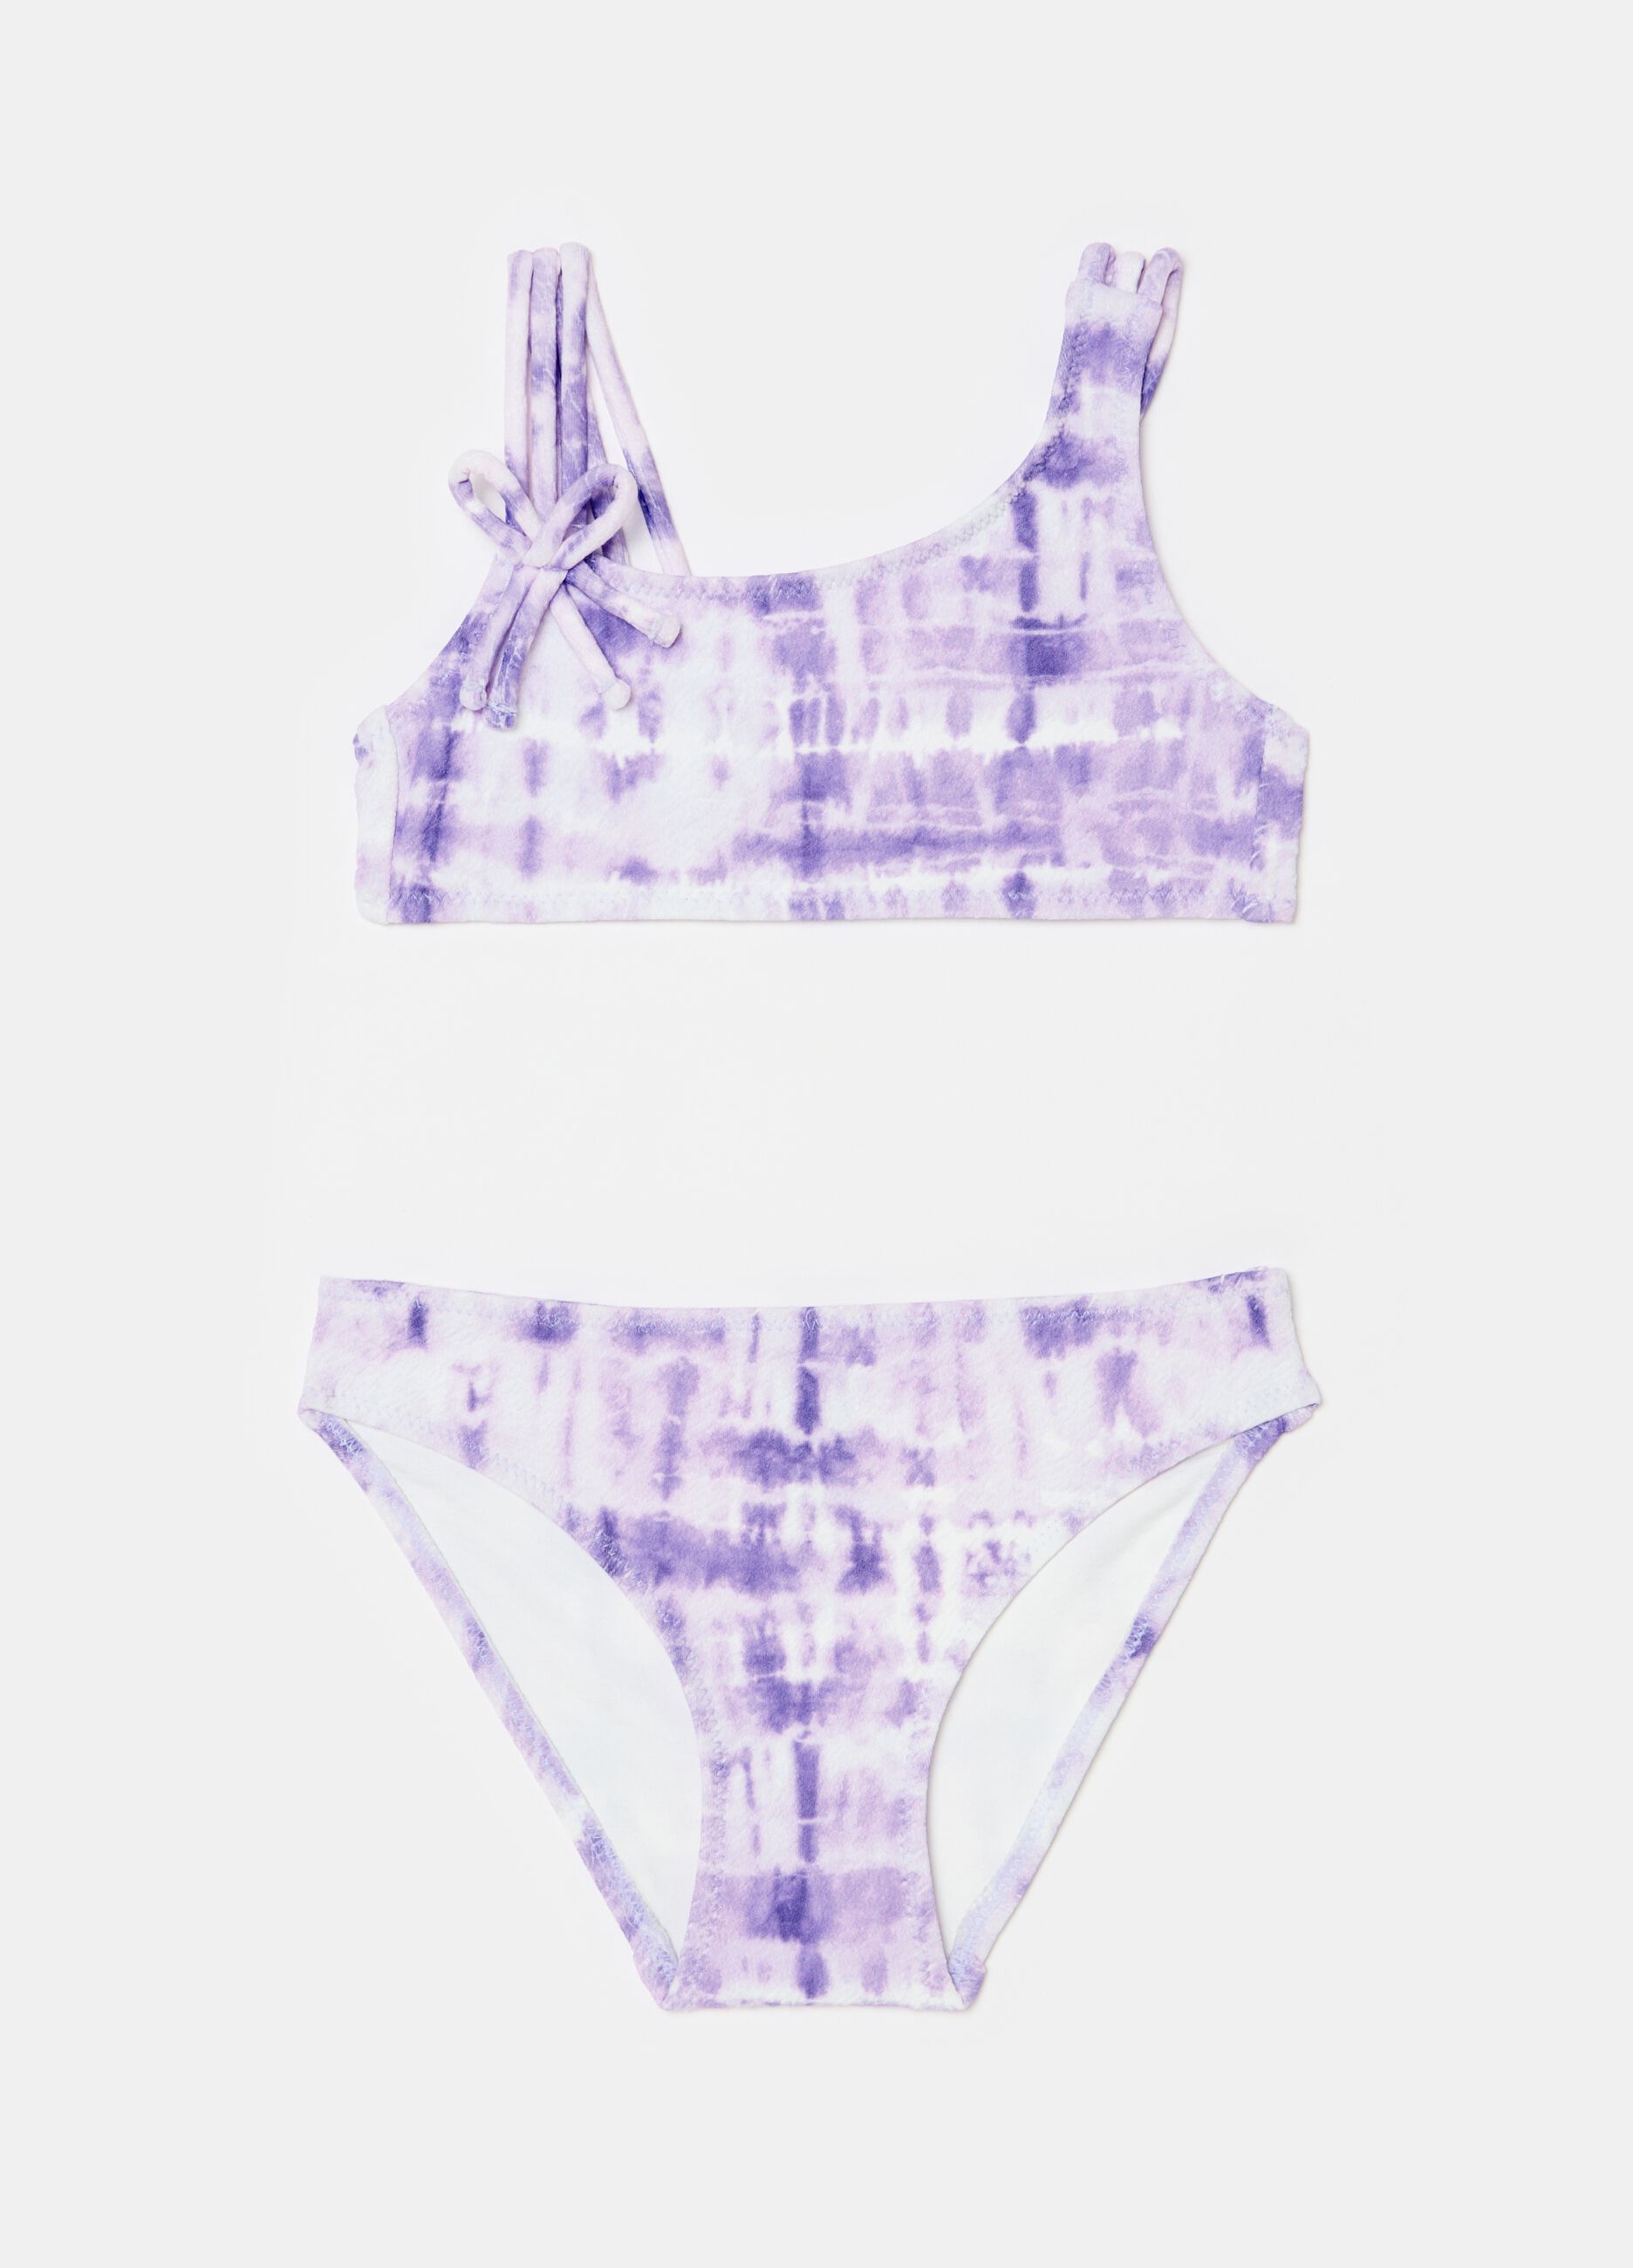 Bikini with tie-dye pattern